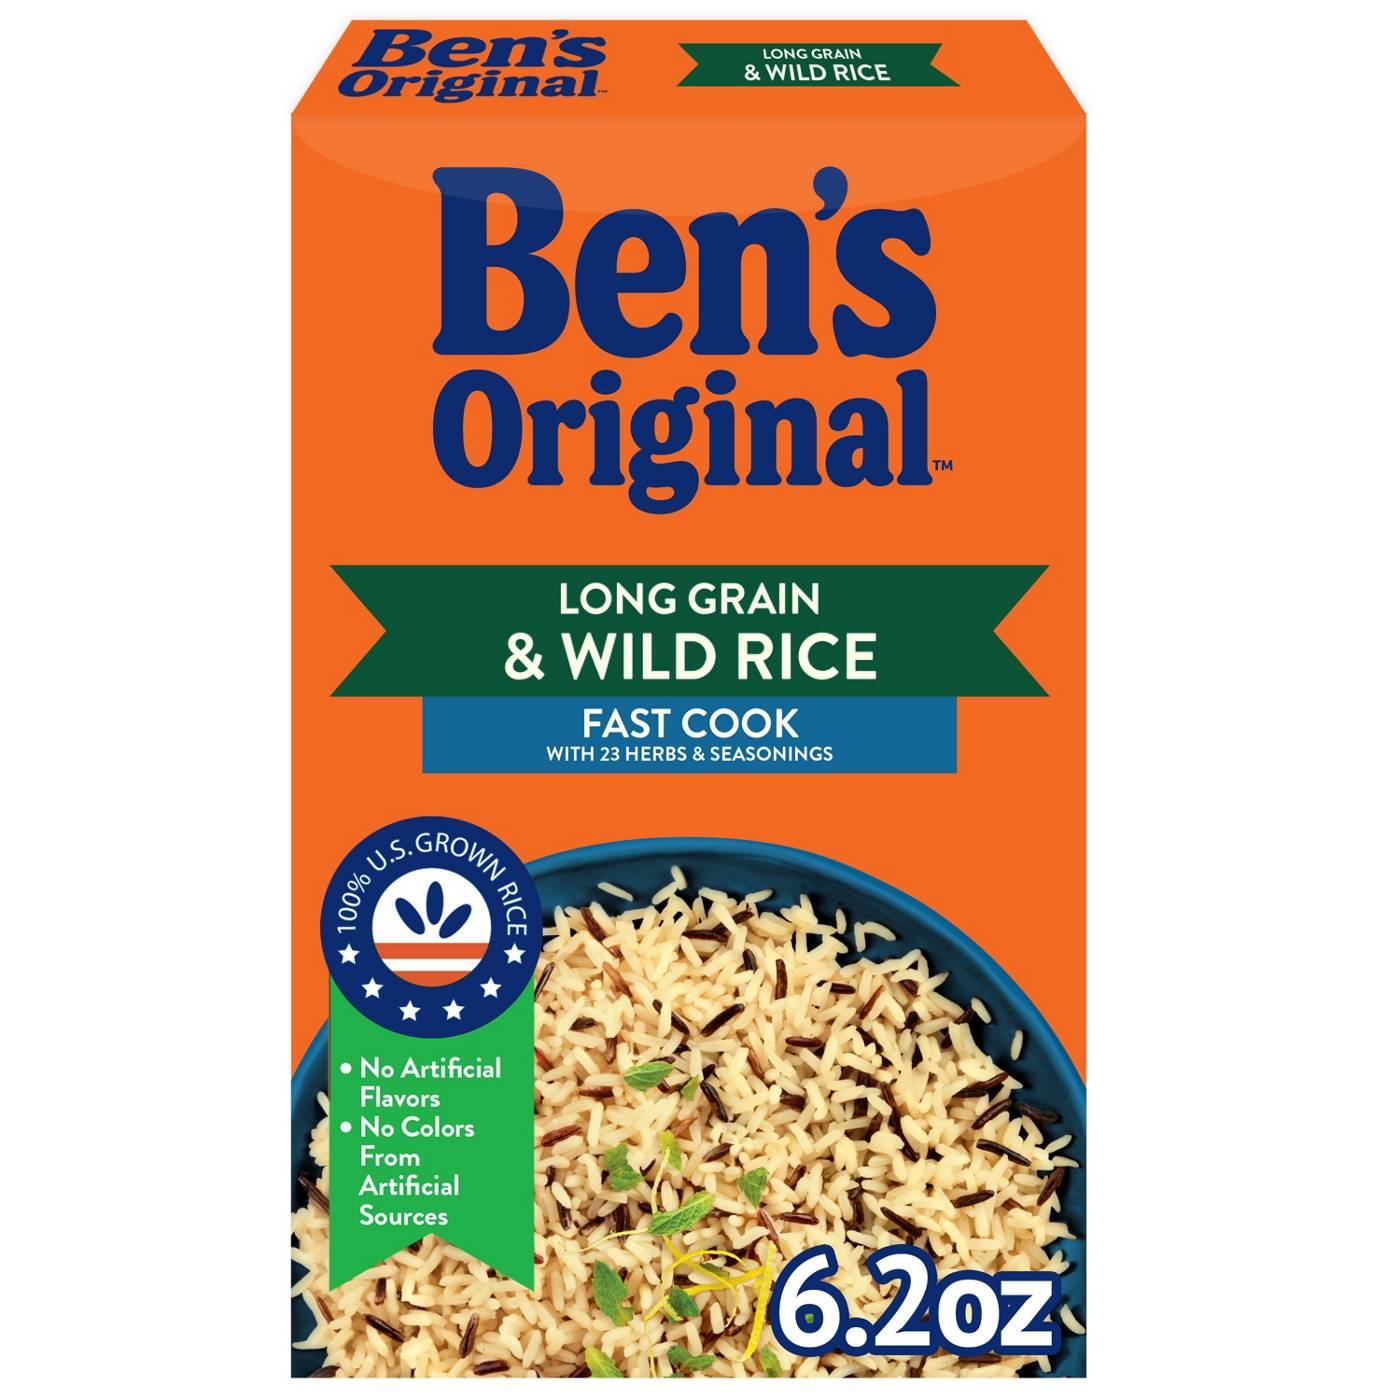 Ben's Original Fast Cook Long Grain and Wild Rice; image 1 of 6